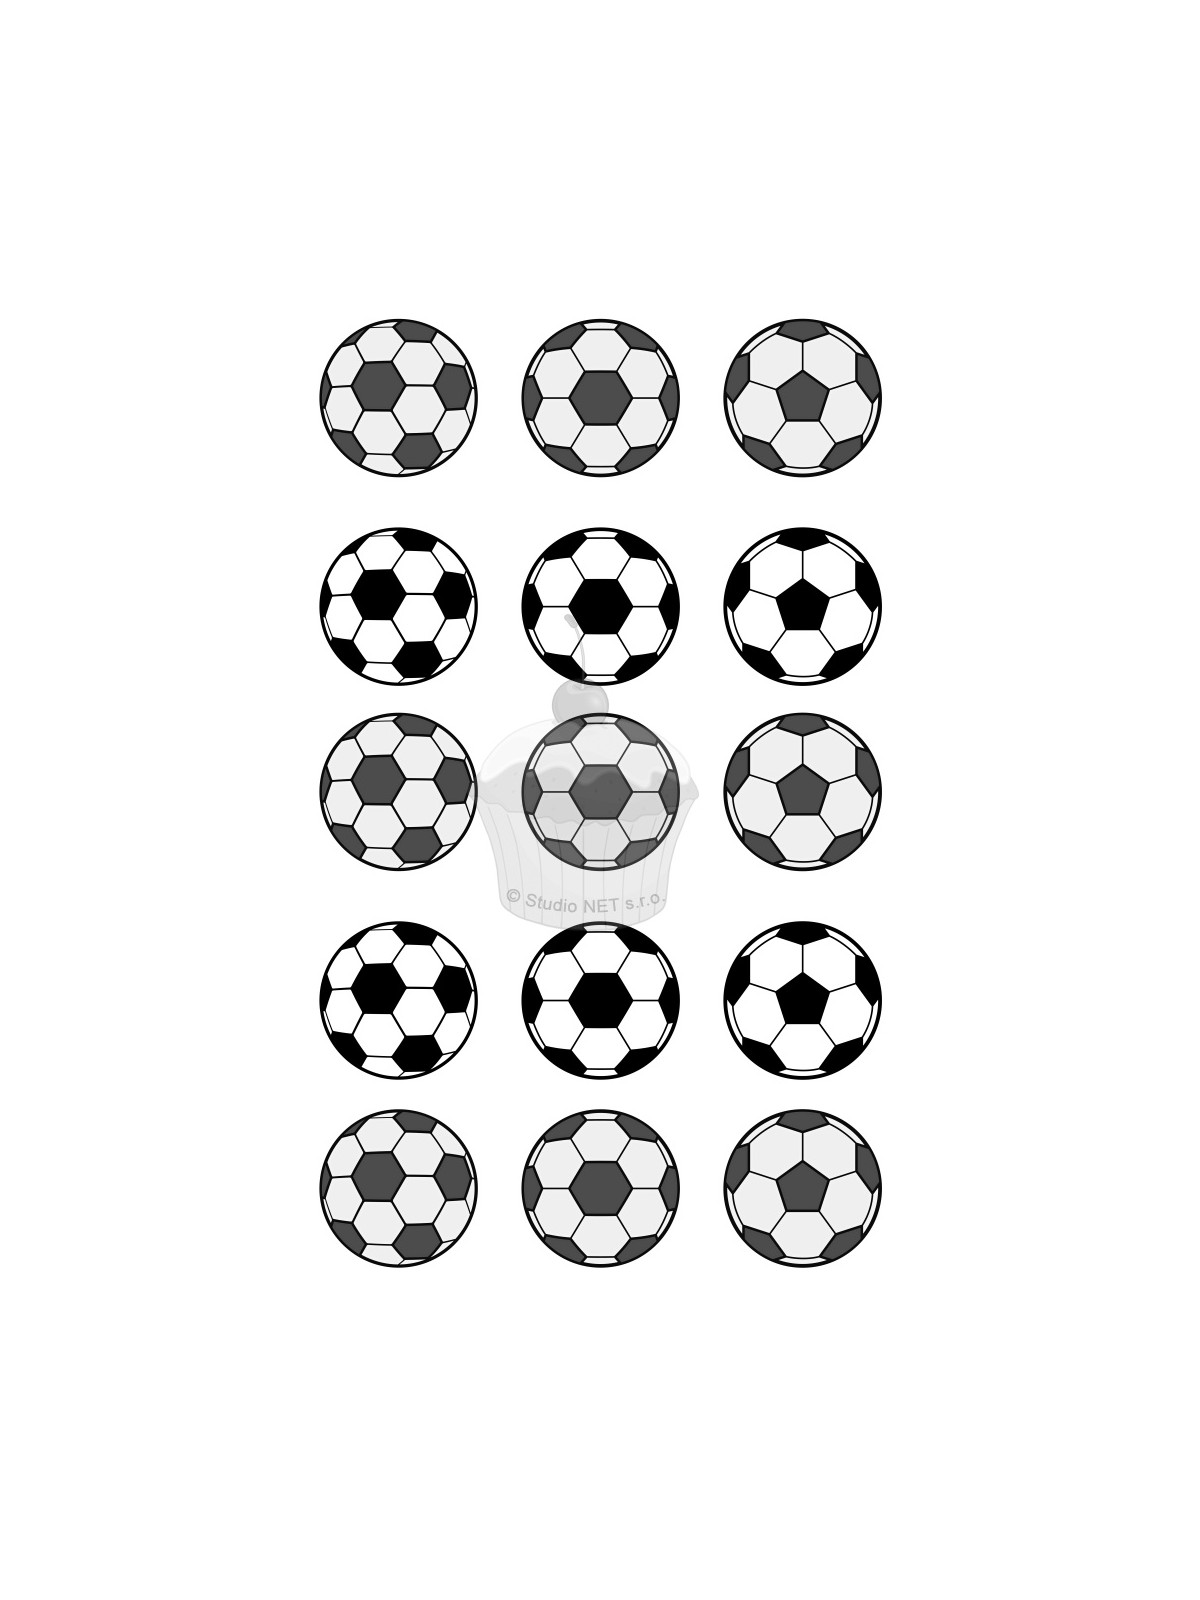 Edible paper "Soccer balls small" A4